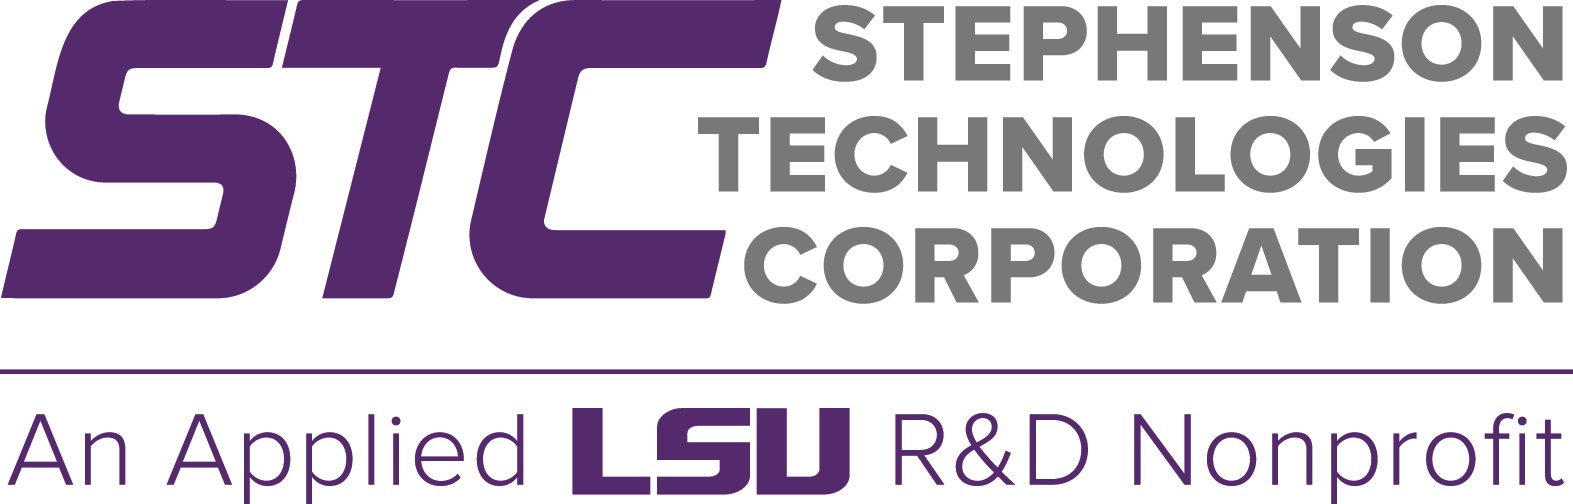 Stephenson Technologies Corporation logo